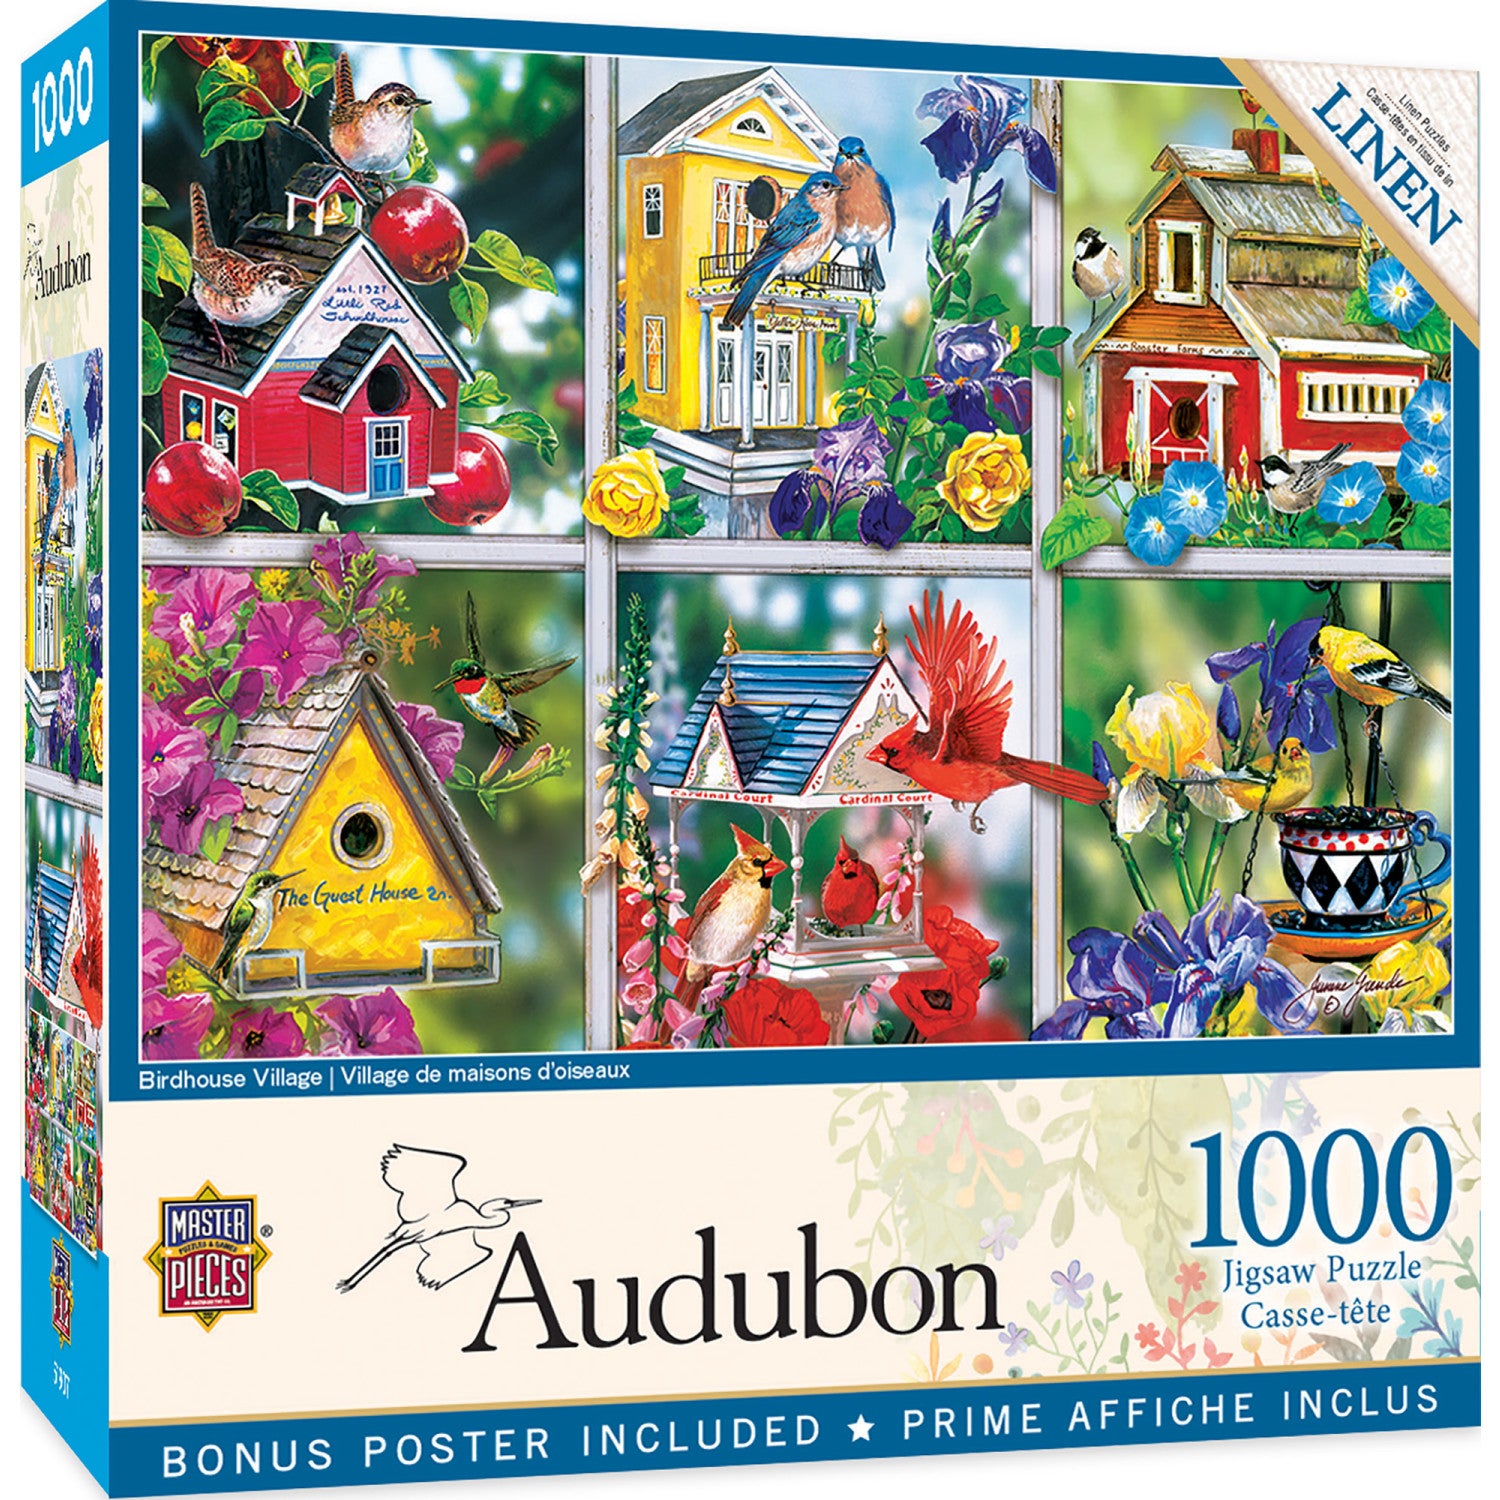 Audubon - Birdhouse Village 1000 Piece Jigsaw Puzzle